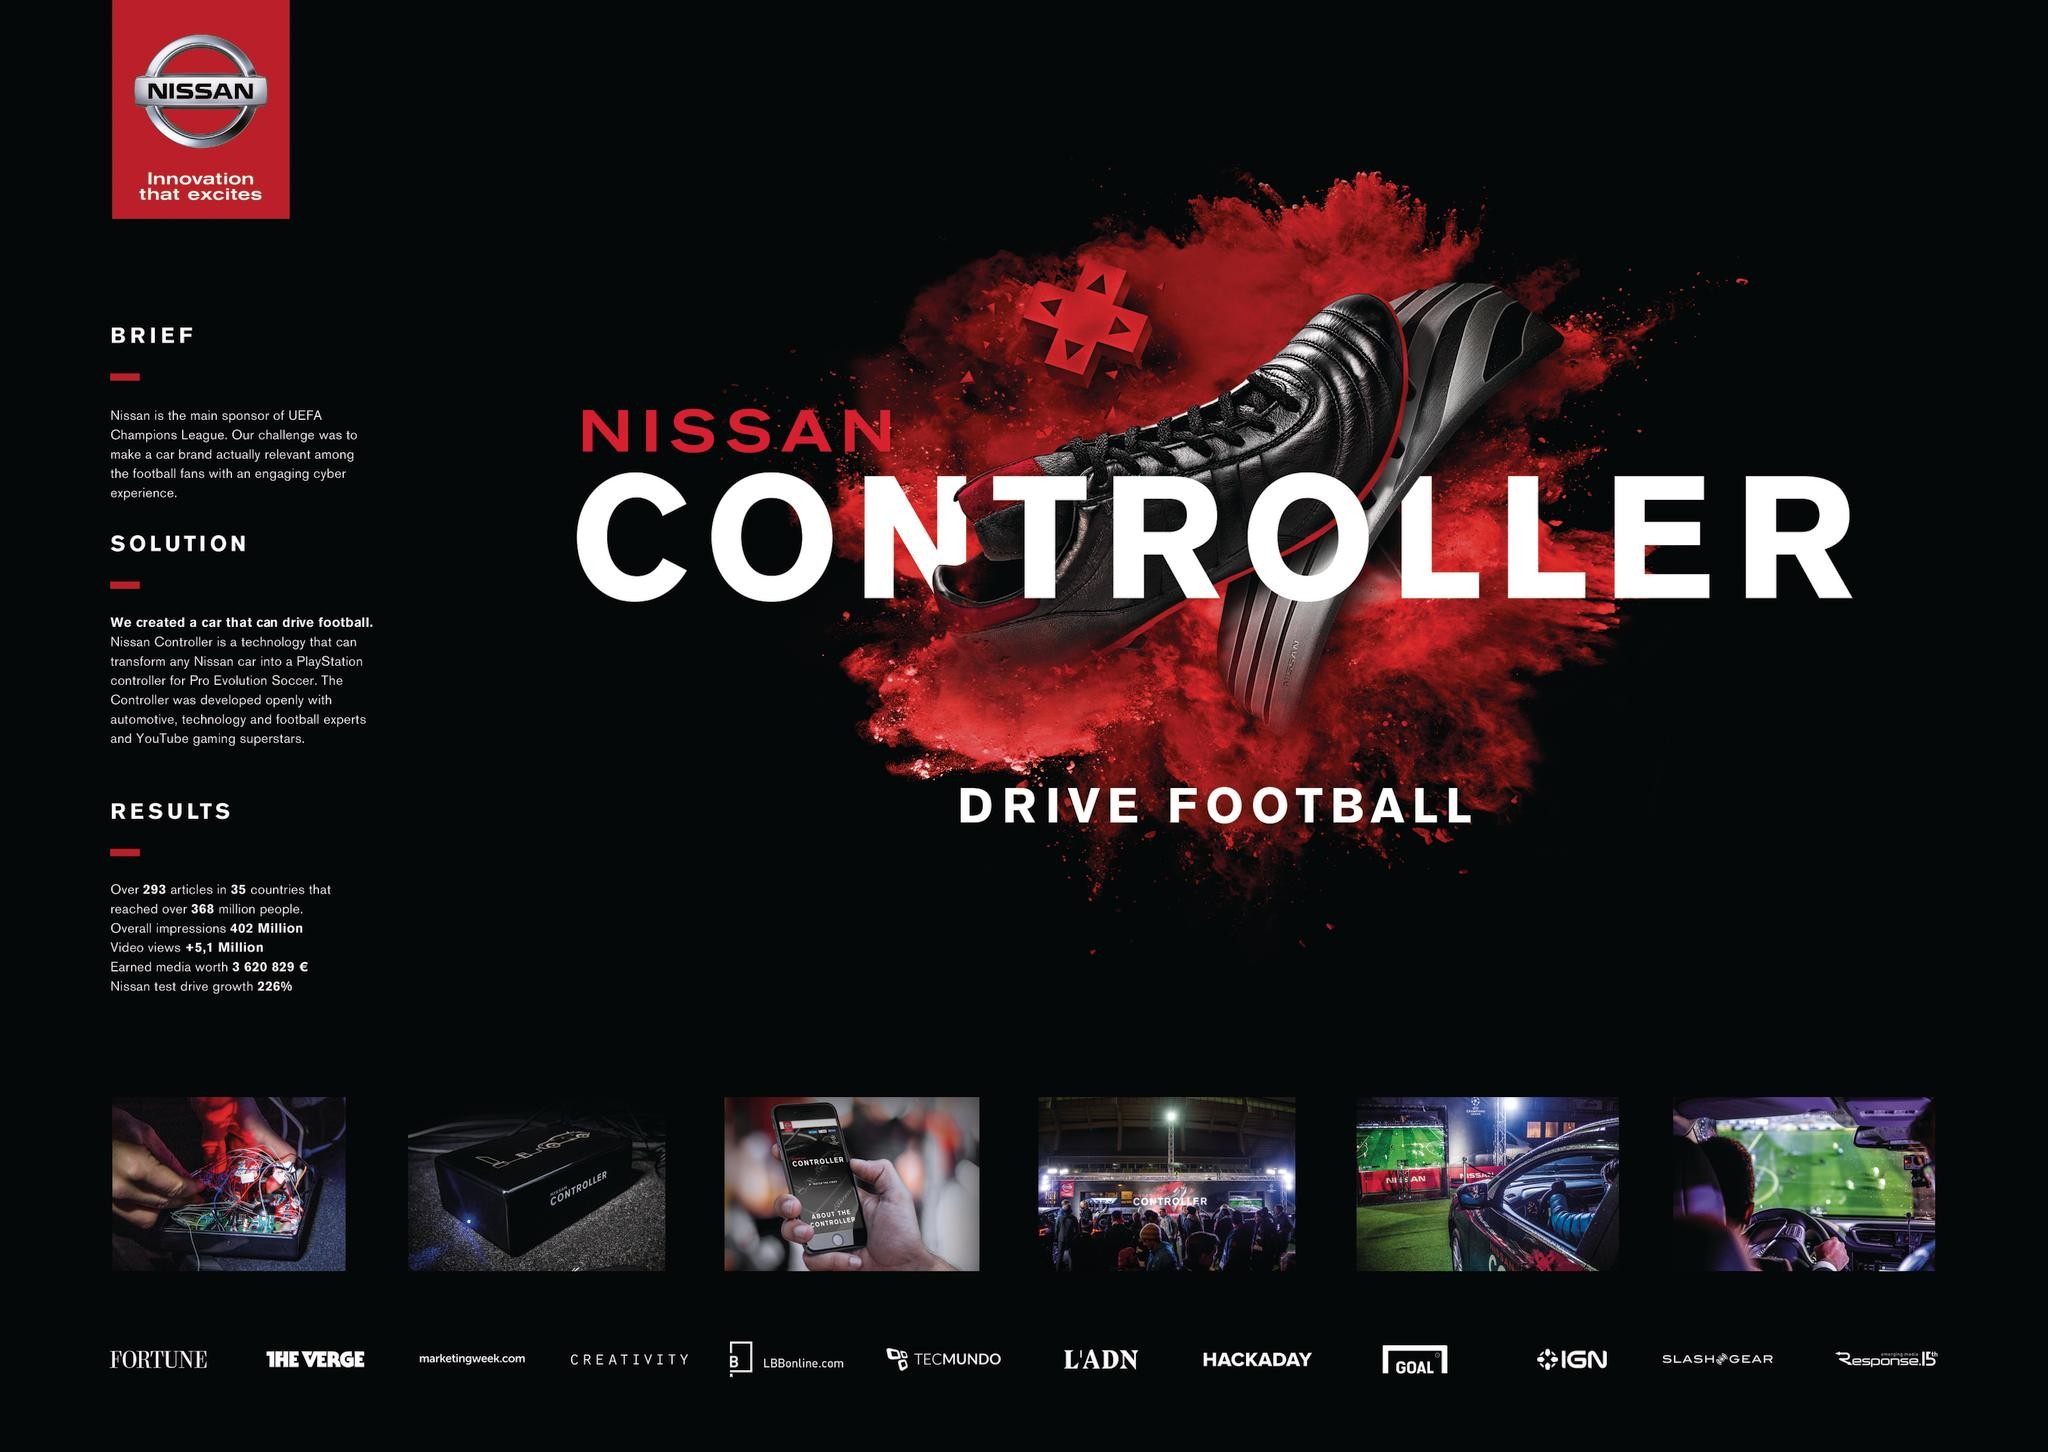 Nissan Controller - Drive Football